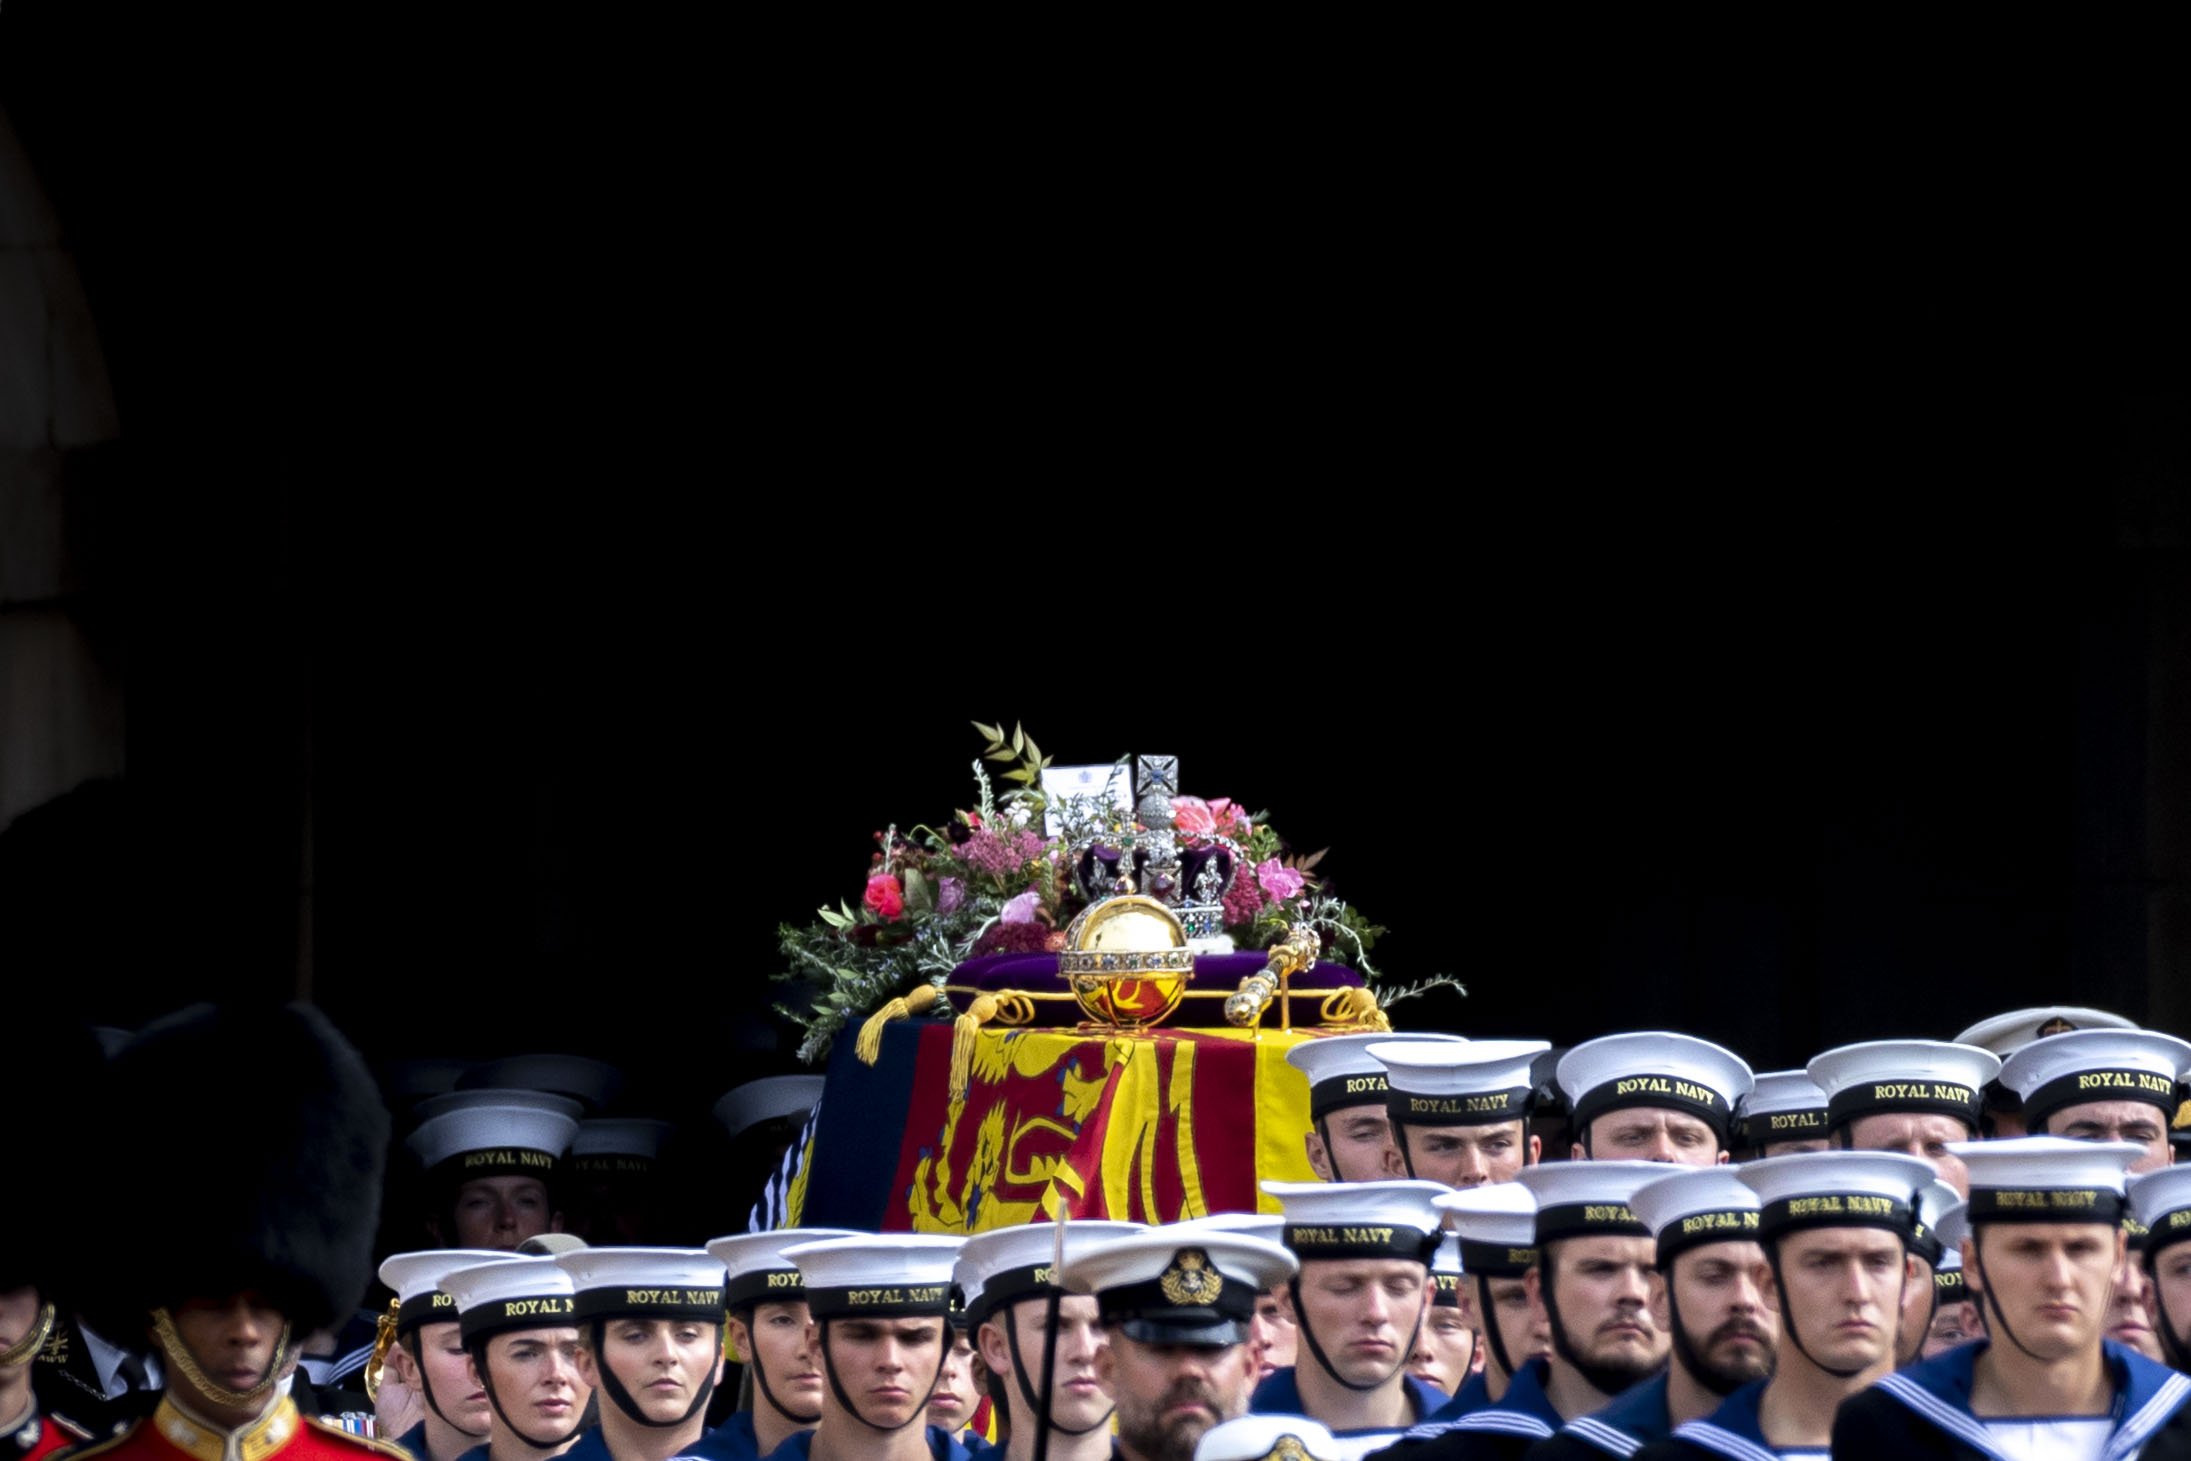  Queen Elizabeth II’s coffin processes through Horse Guards Parade - Sep 2022. 